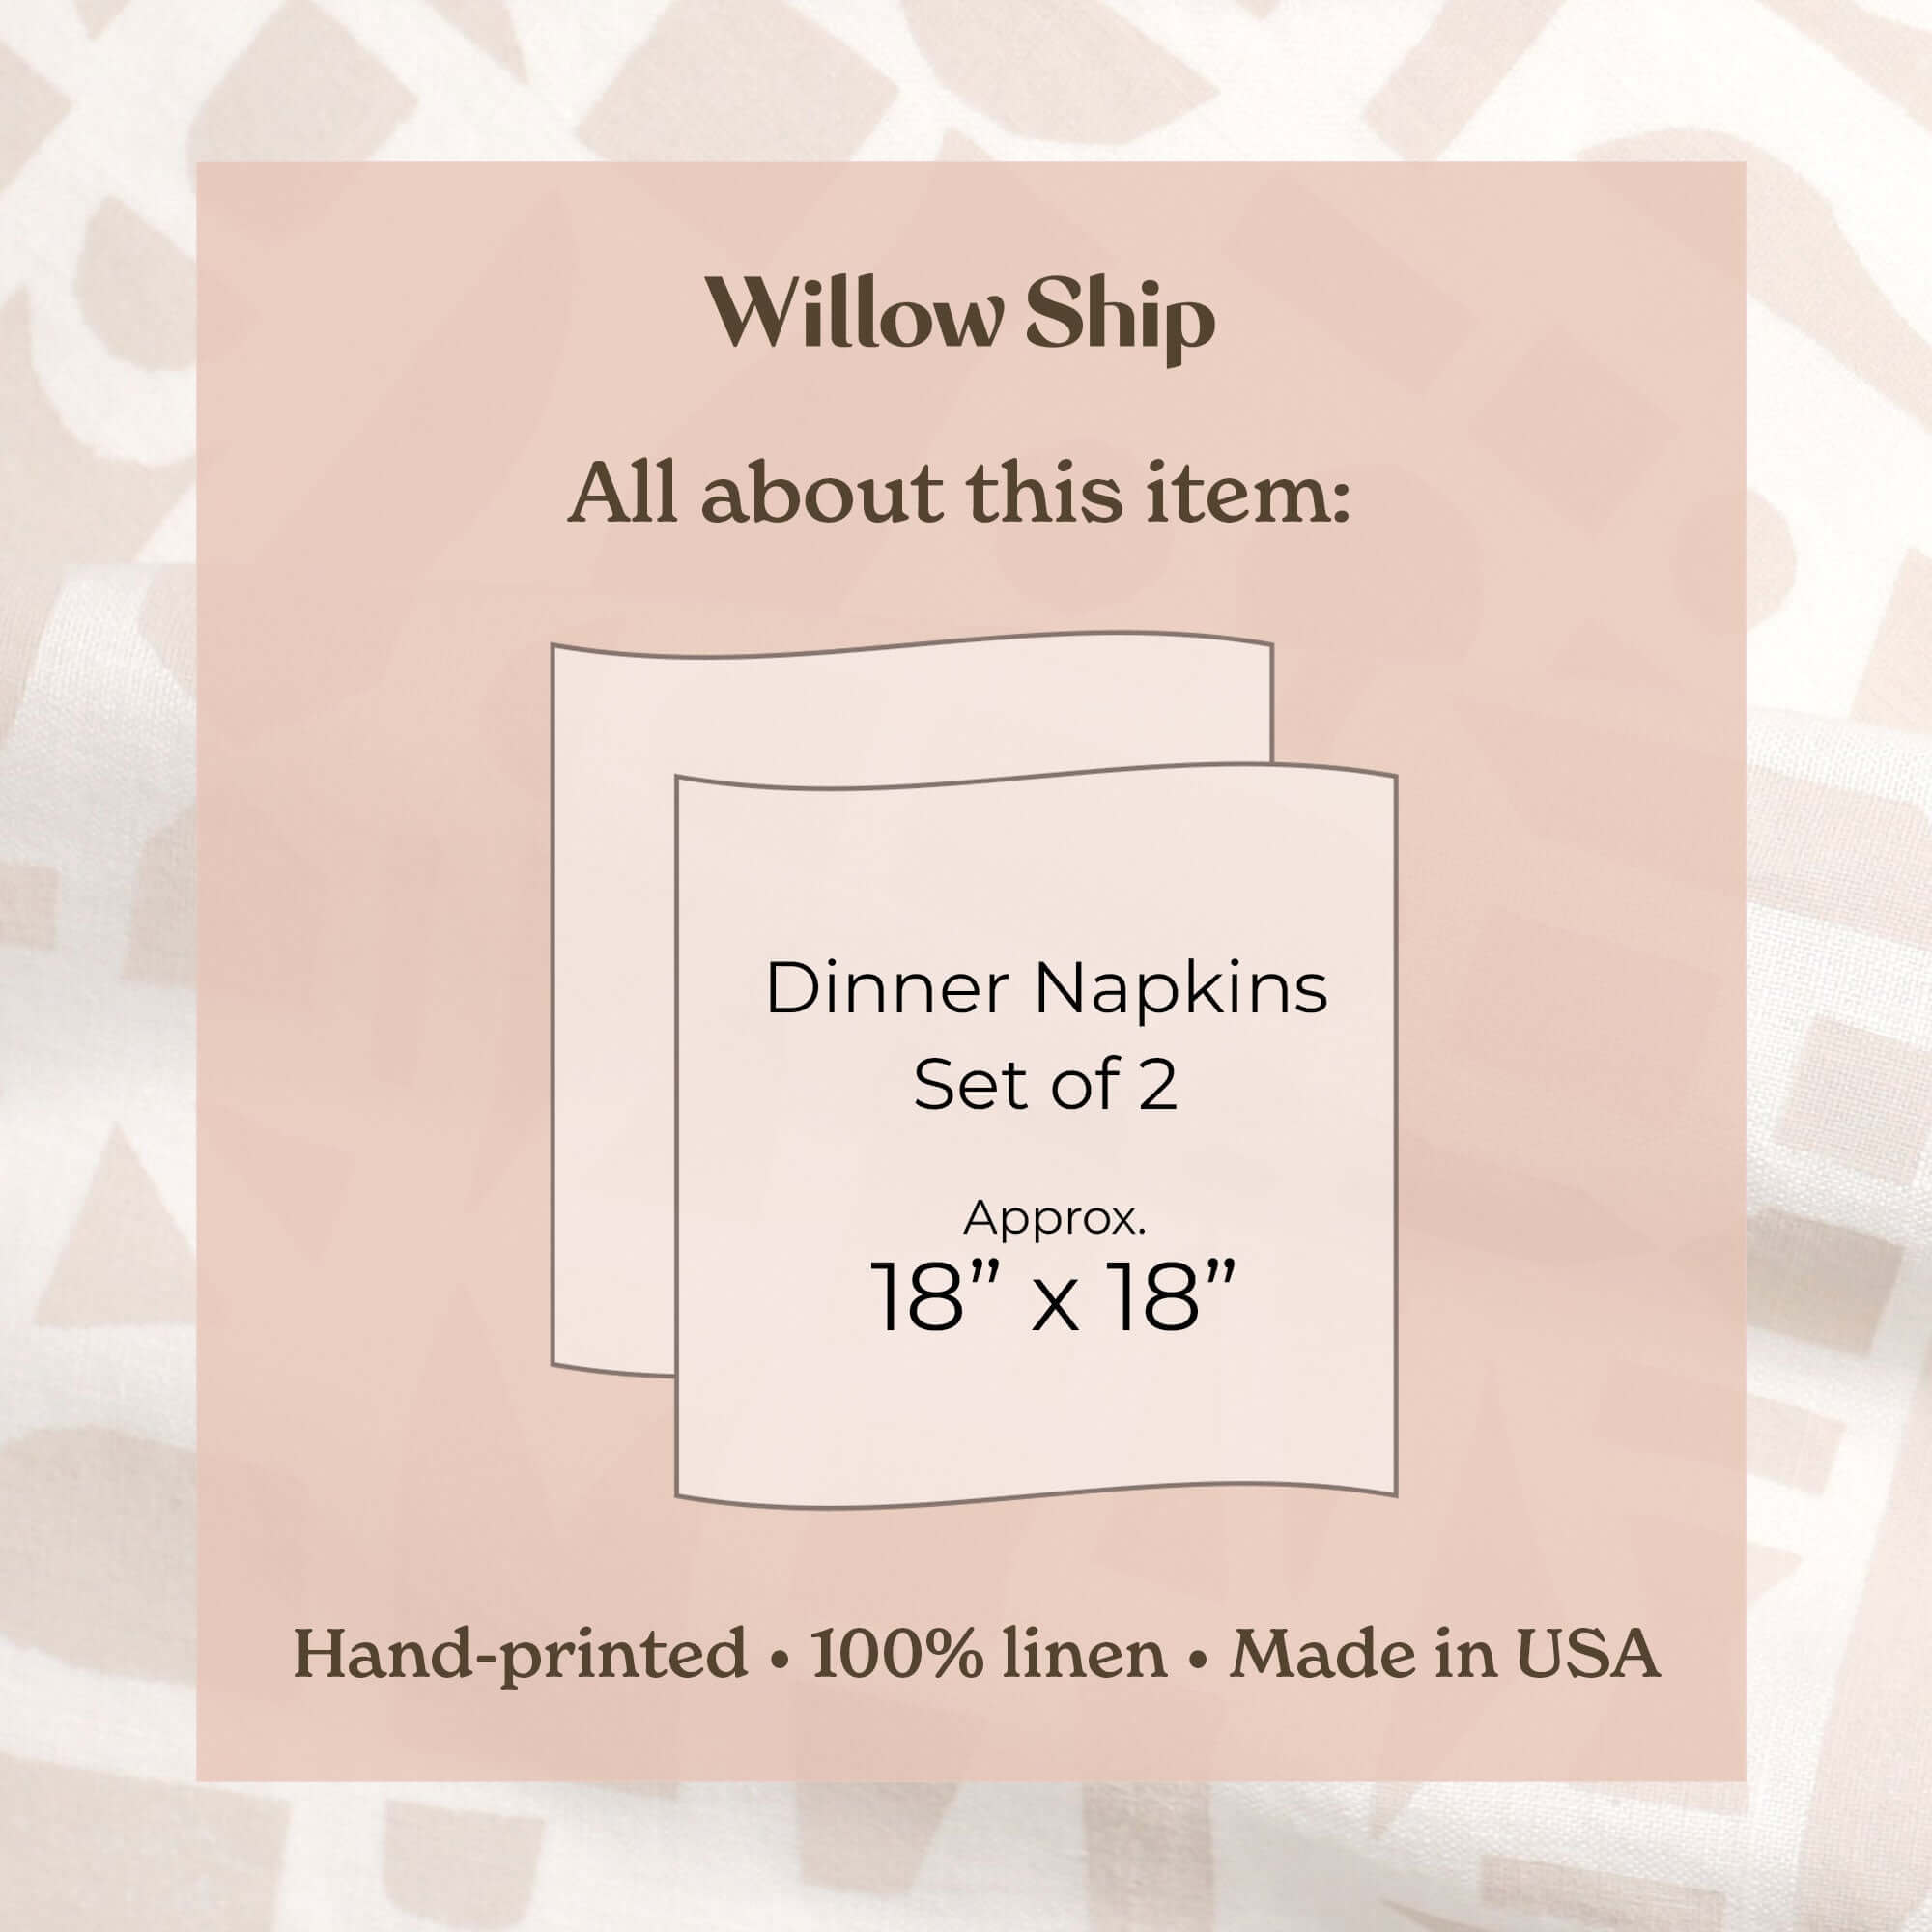 'Windows' Hand-Printed 100% Linen Dinner Napkins, Salmon colorway - Set of 2